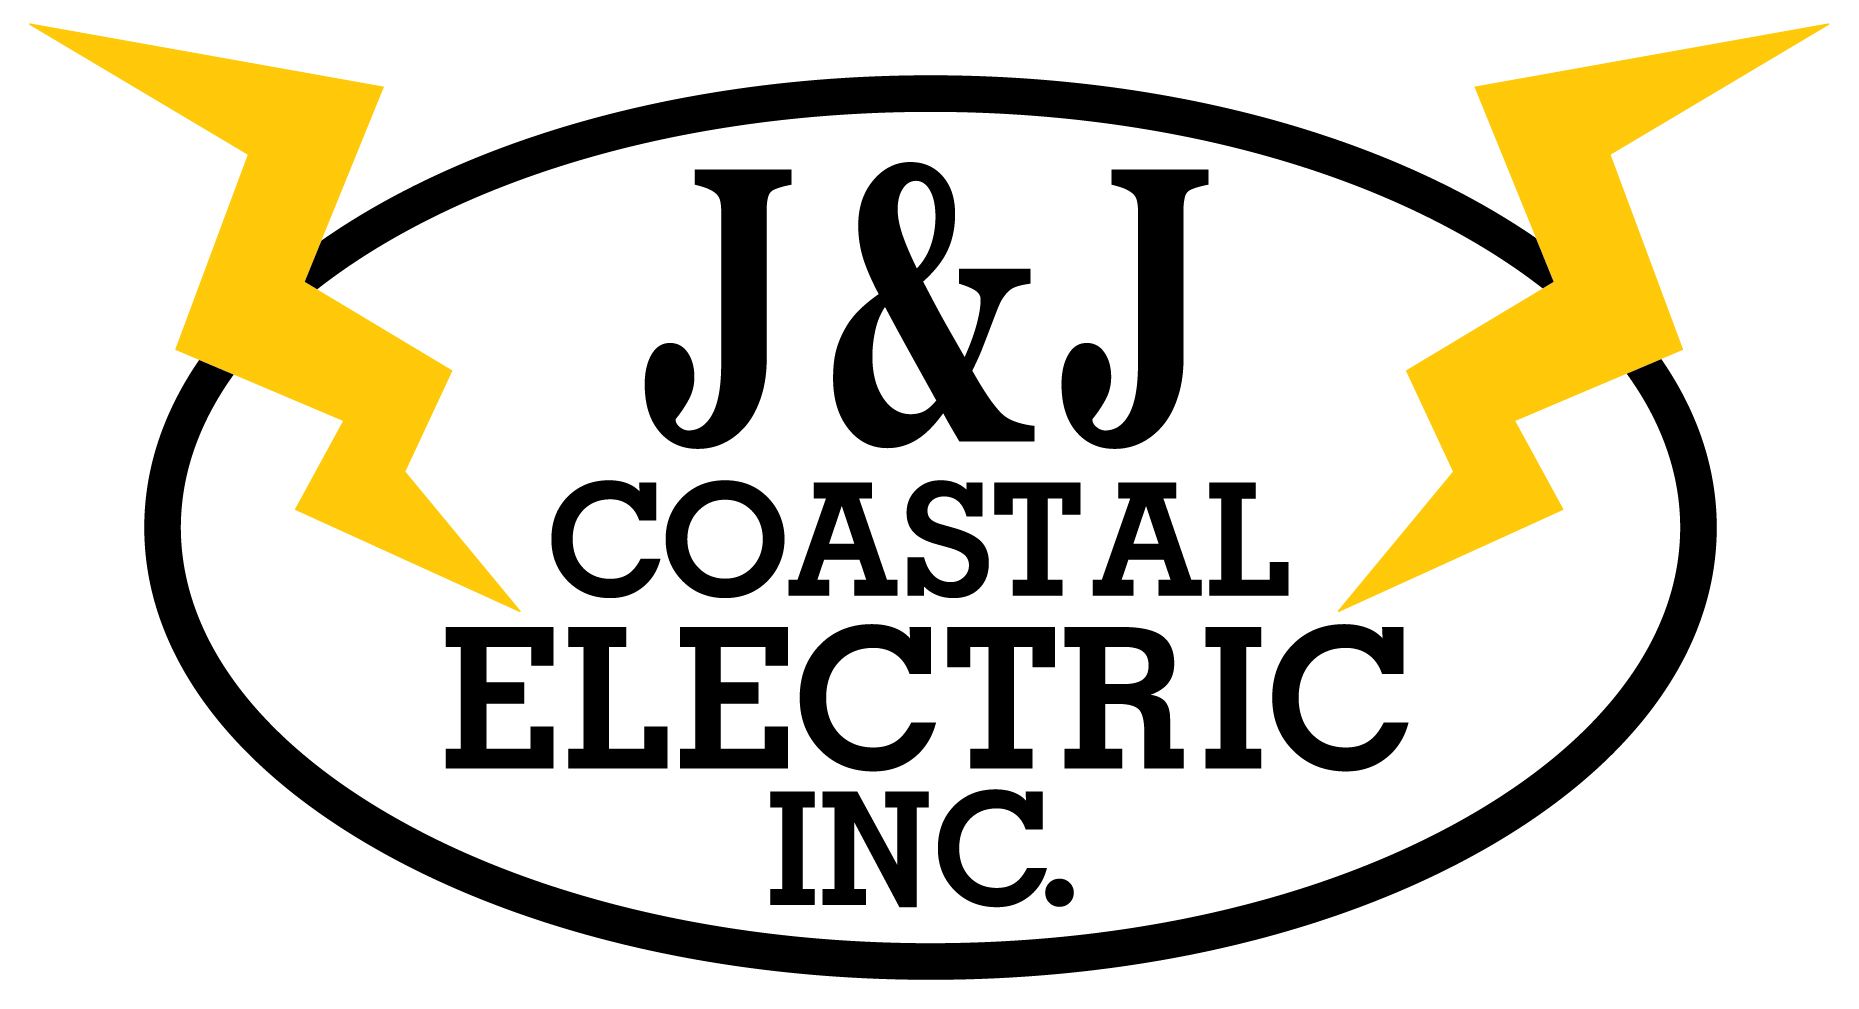 J&J Coastal Electric Inc. logo